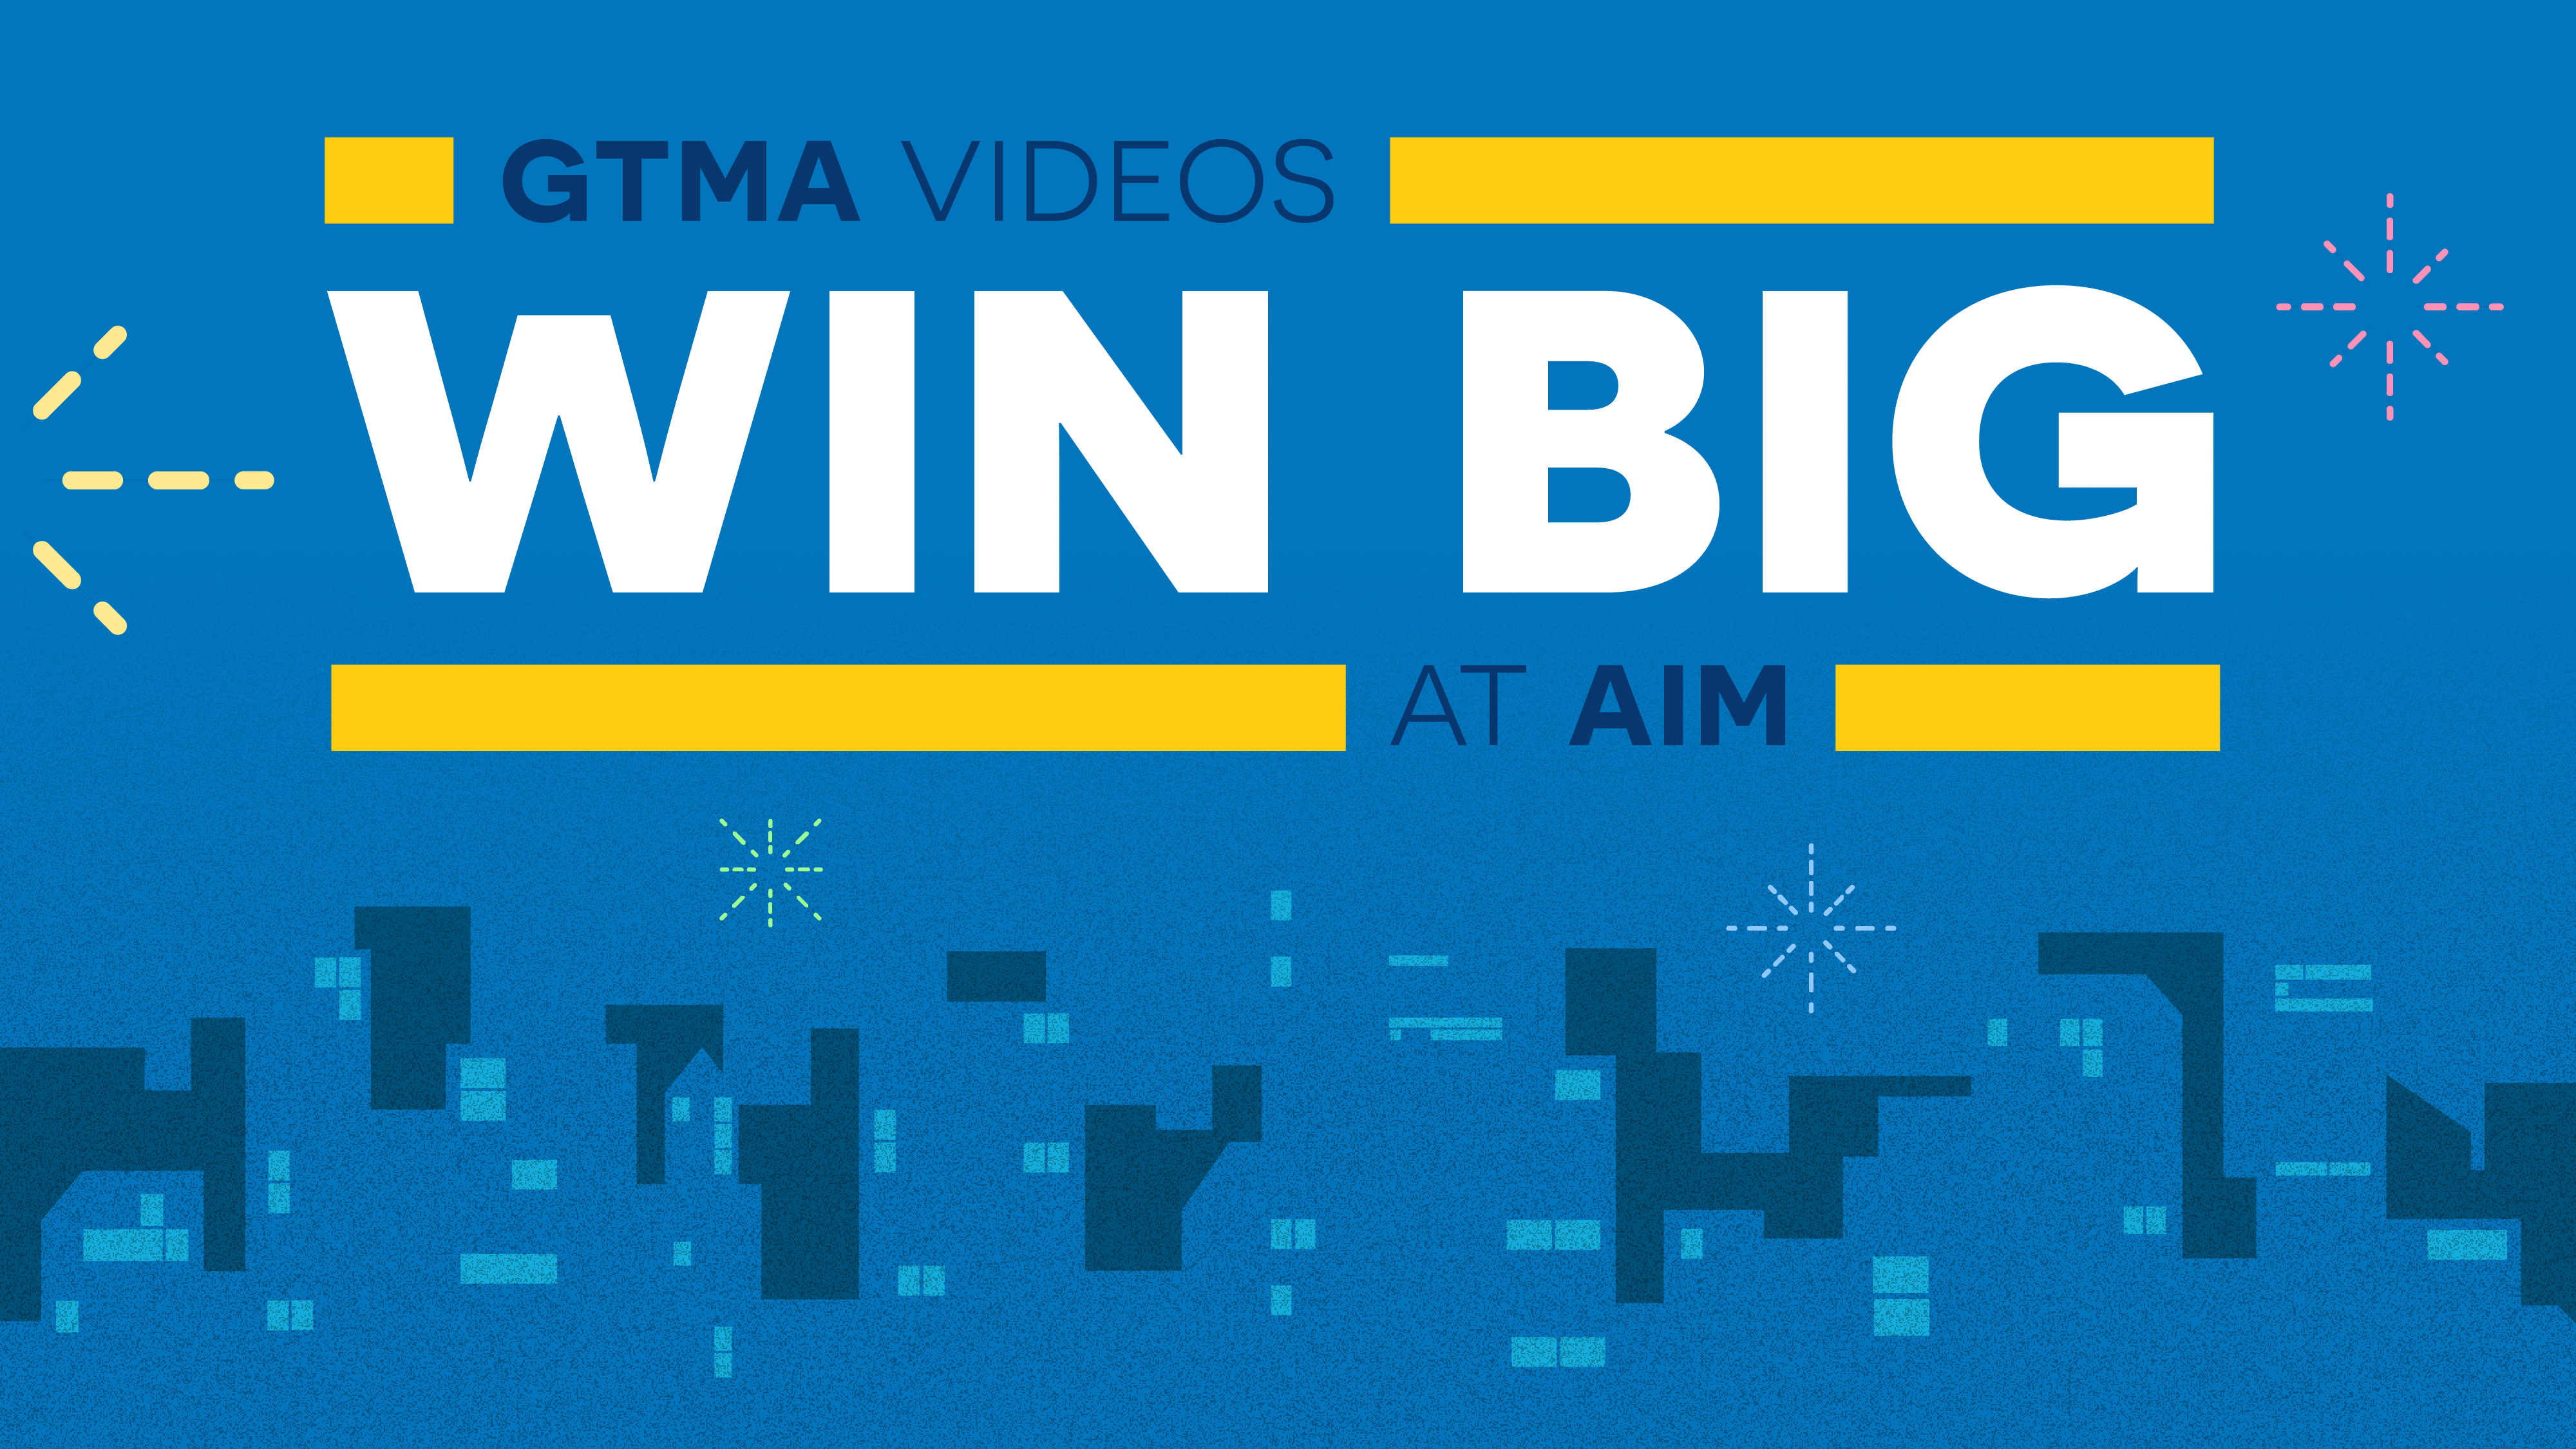 GTMA Wins Video Awards at AIM Conference